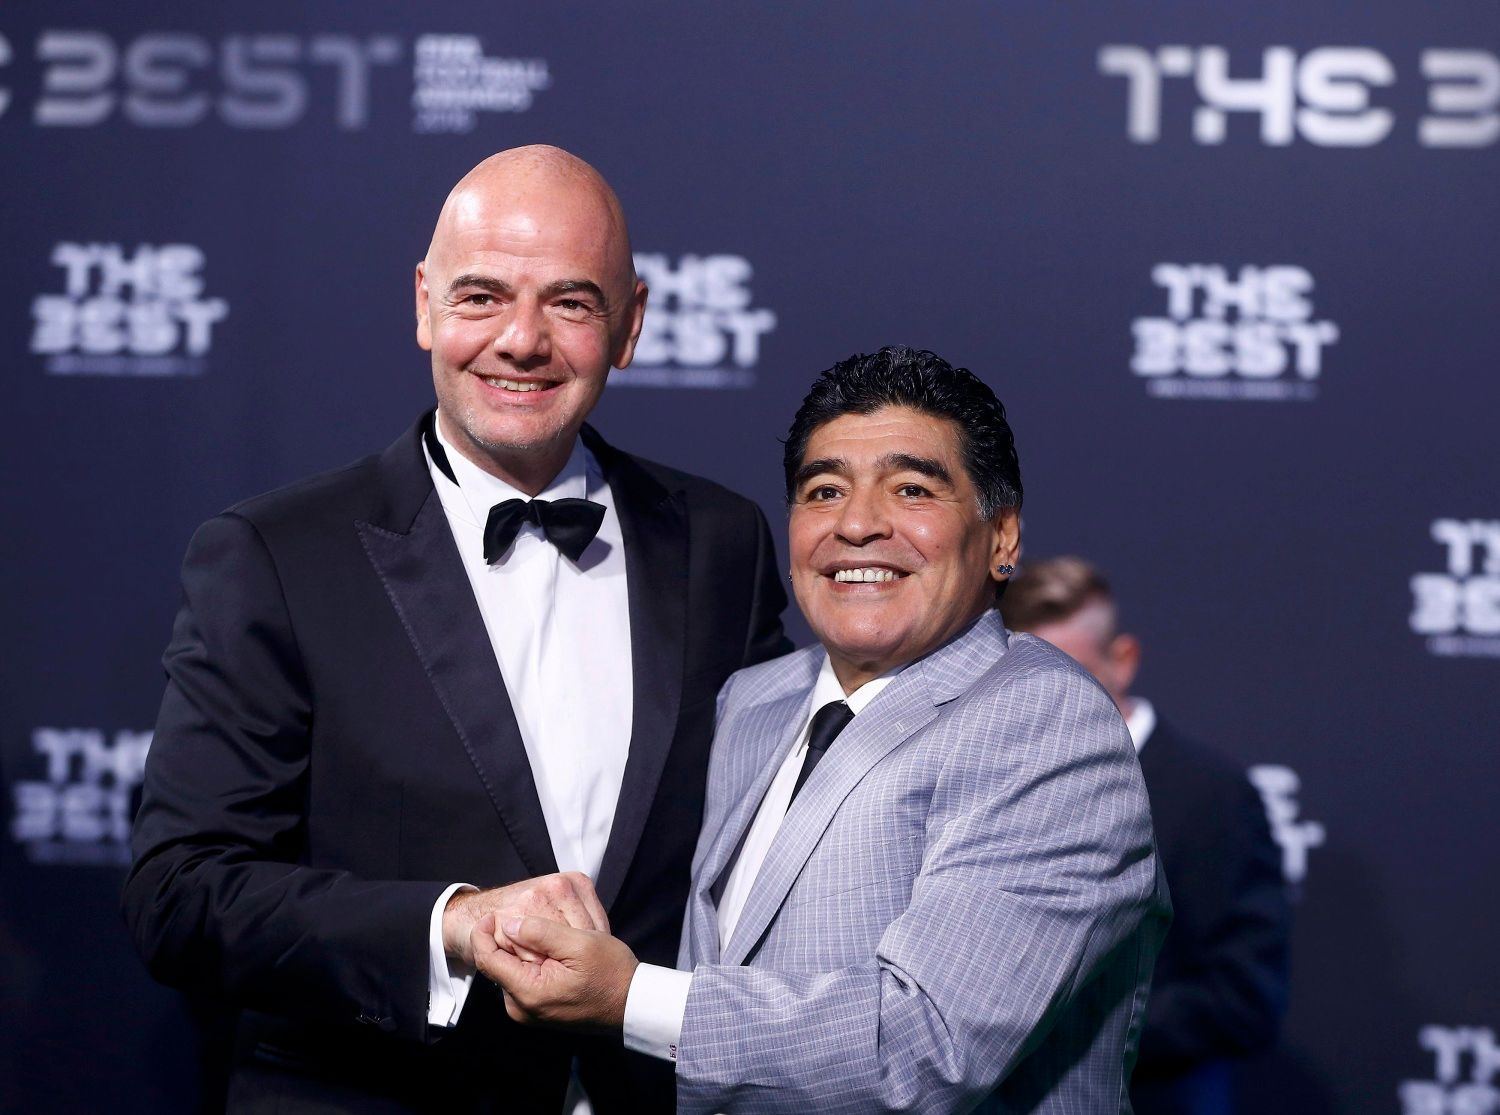 Galavečer FIFA 2017: prezident FIFA Gianni Infantino a Diego Armando Maradona